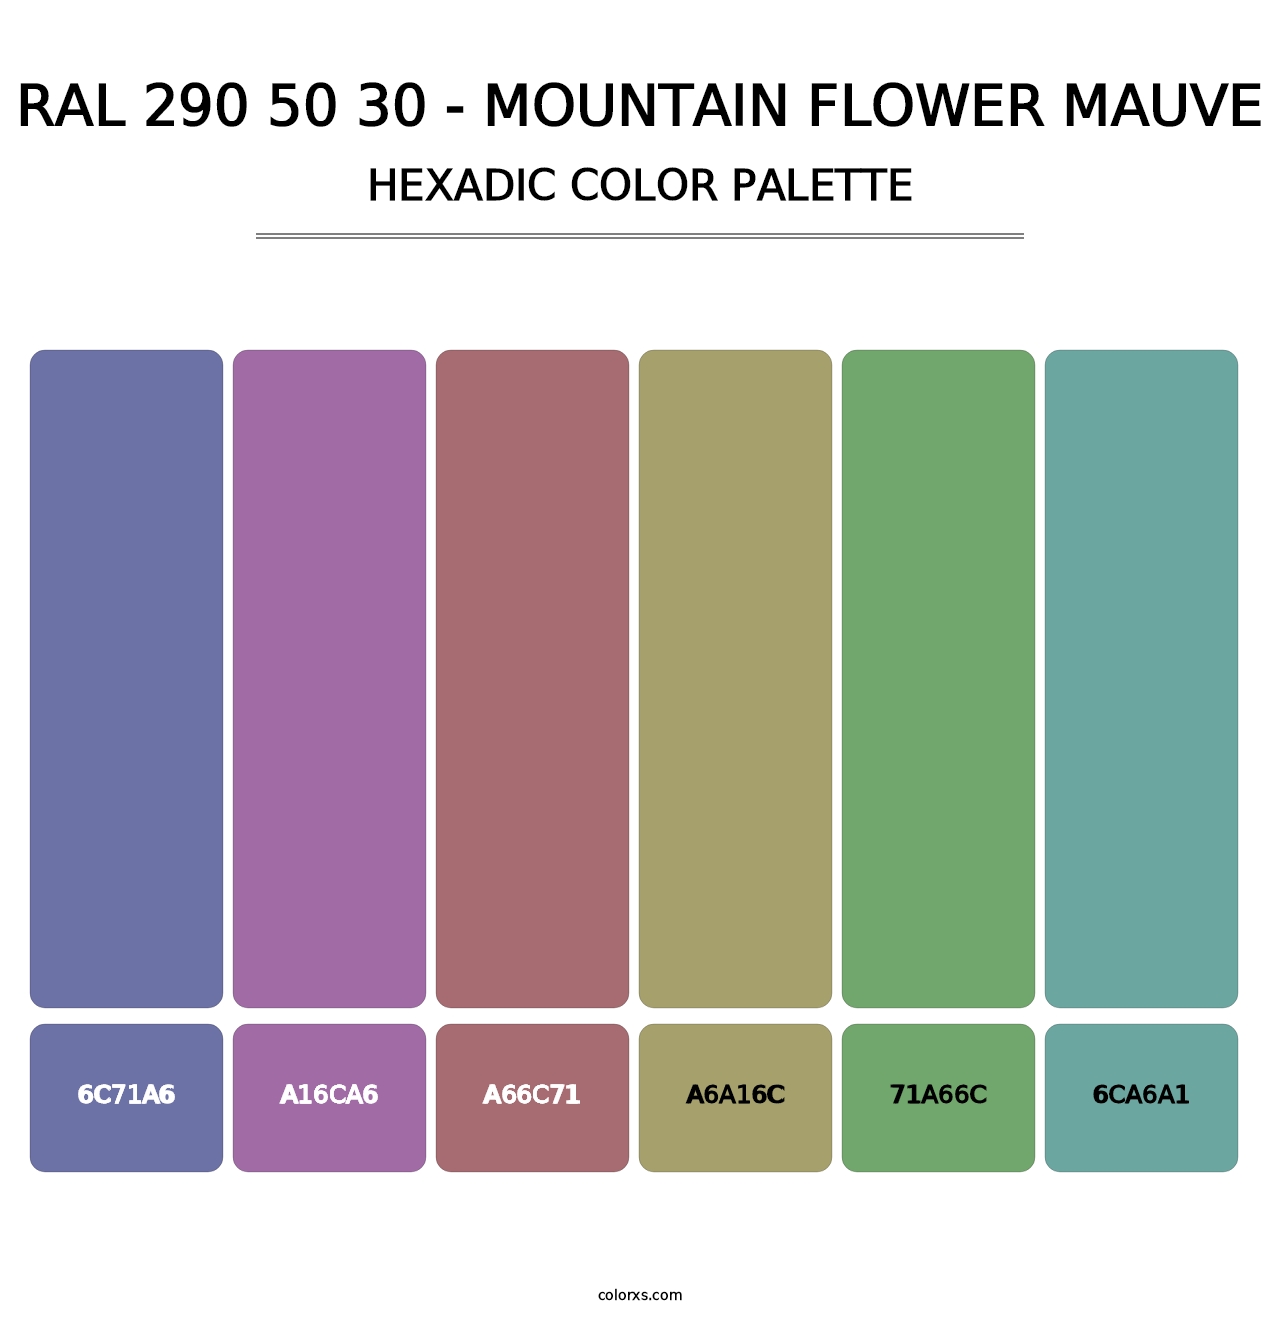 RAL 290 50 30 - Mountain Flower Mauve - Hexadic Color Palette